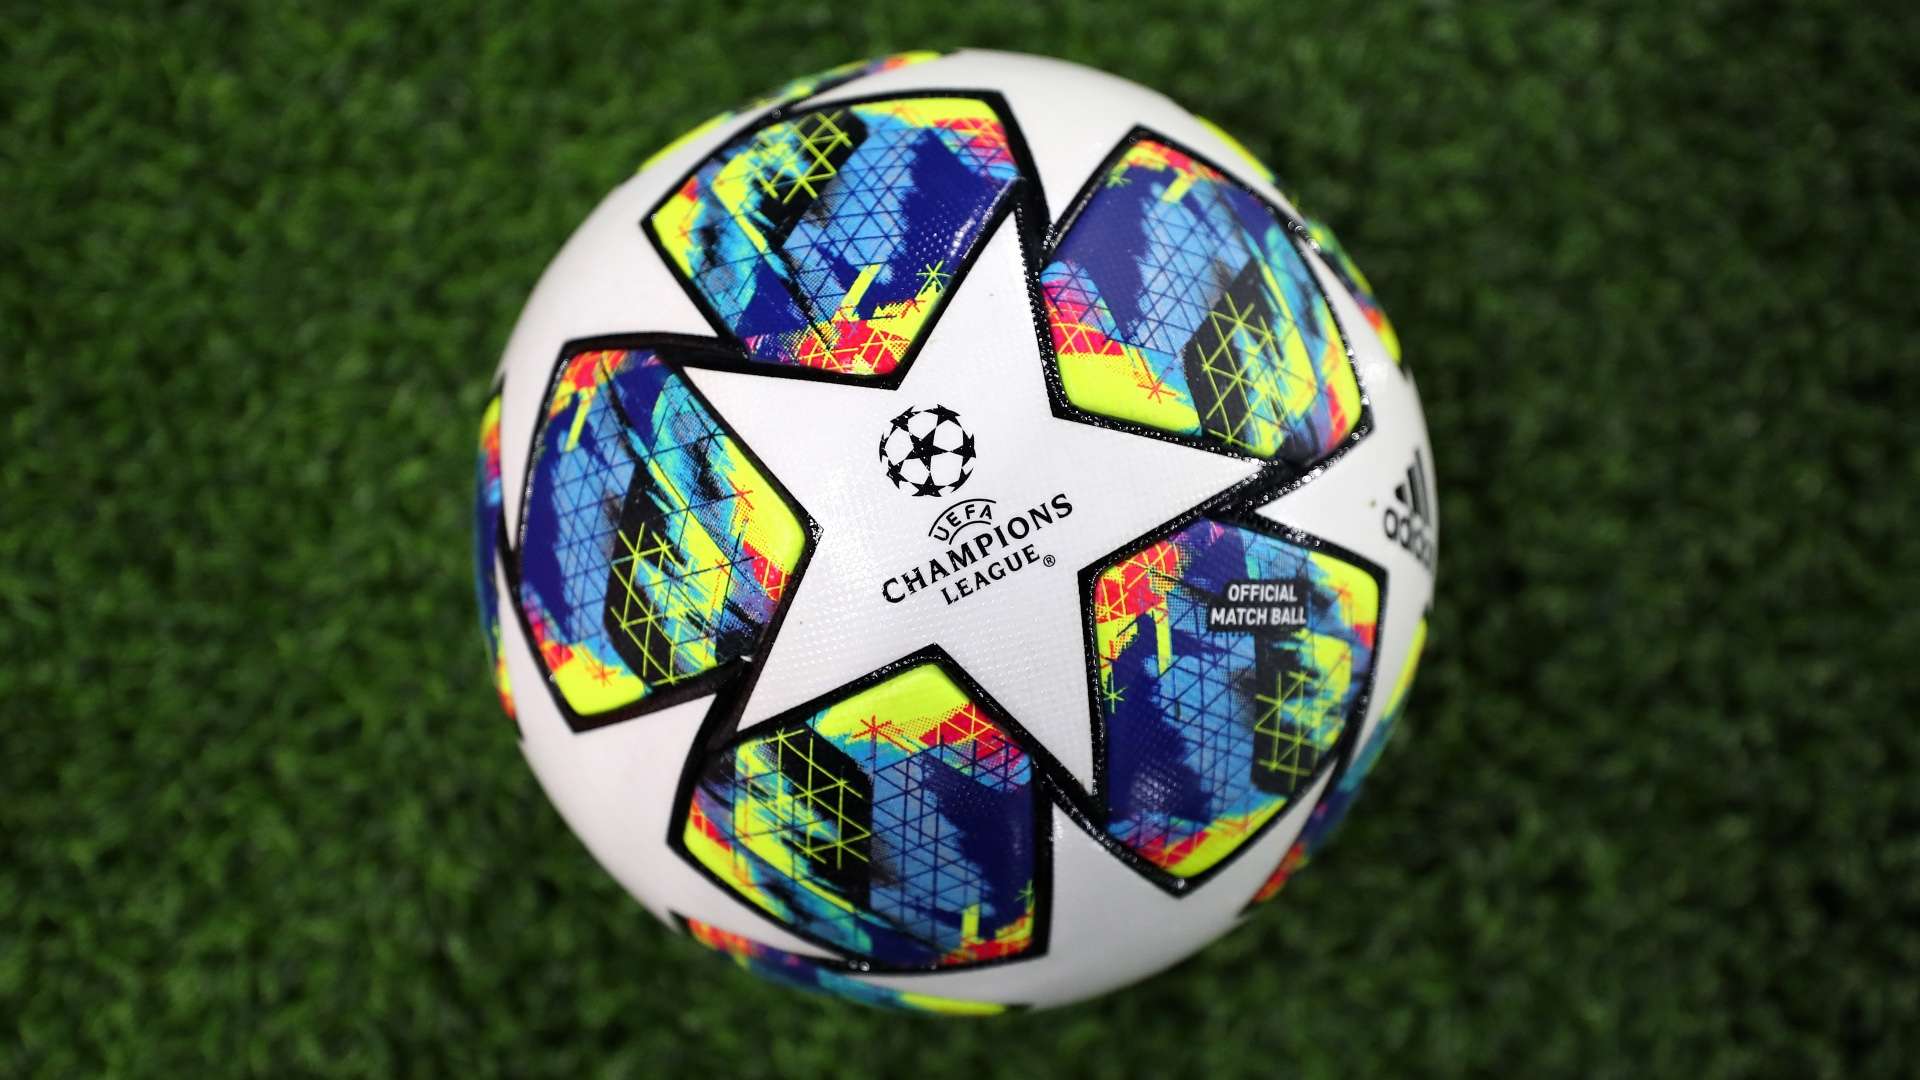 Champions League ball